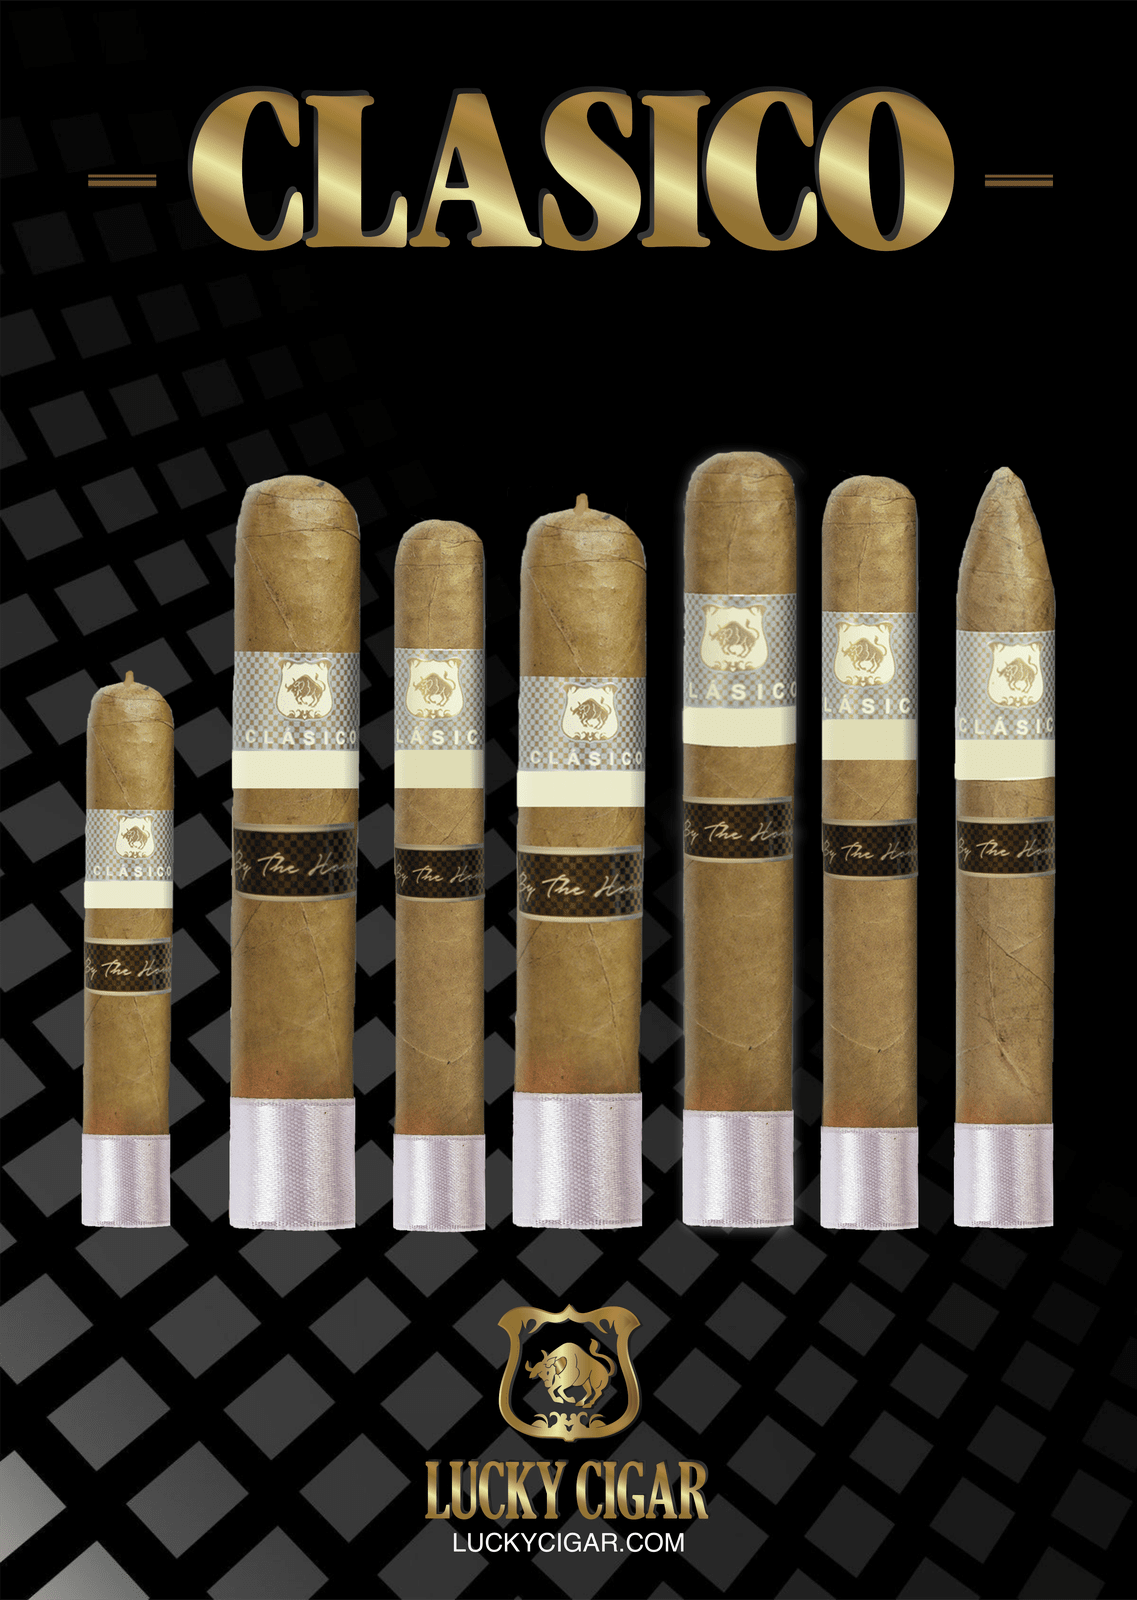 Classic Cigars - Classico by Lucky Cigar: Set of 7 Cigars, Robusto, Toro, Torpedo, Gordo, Super Gordo, Churchill, Rotchilde